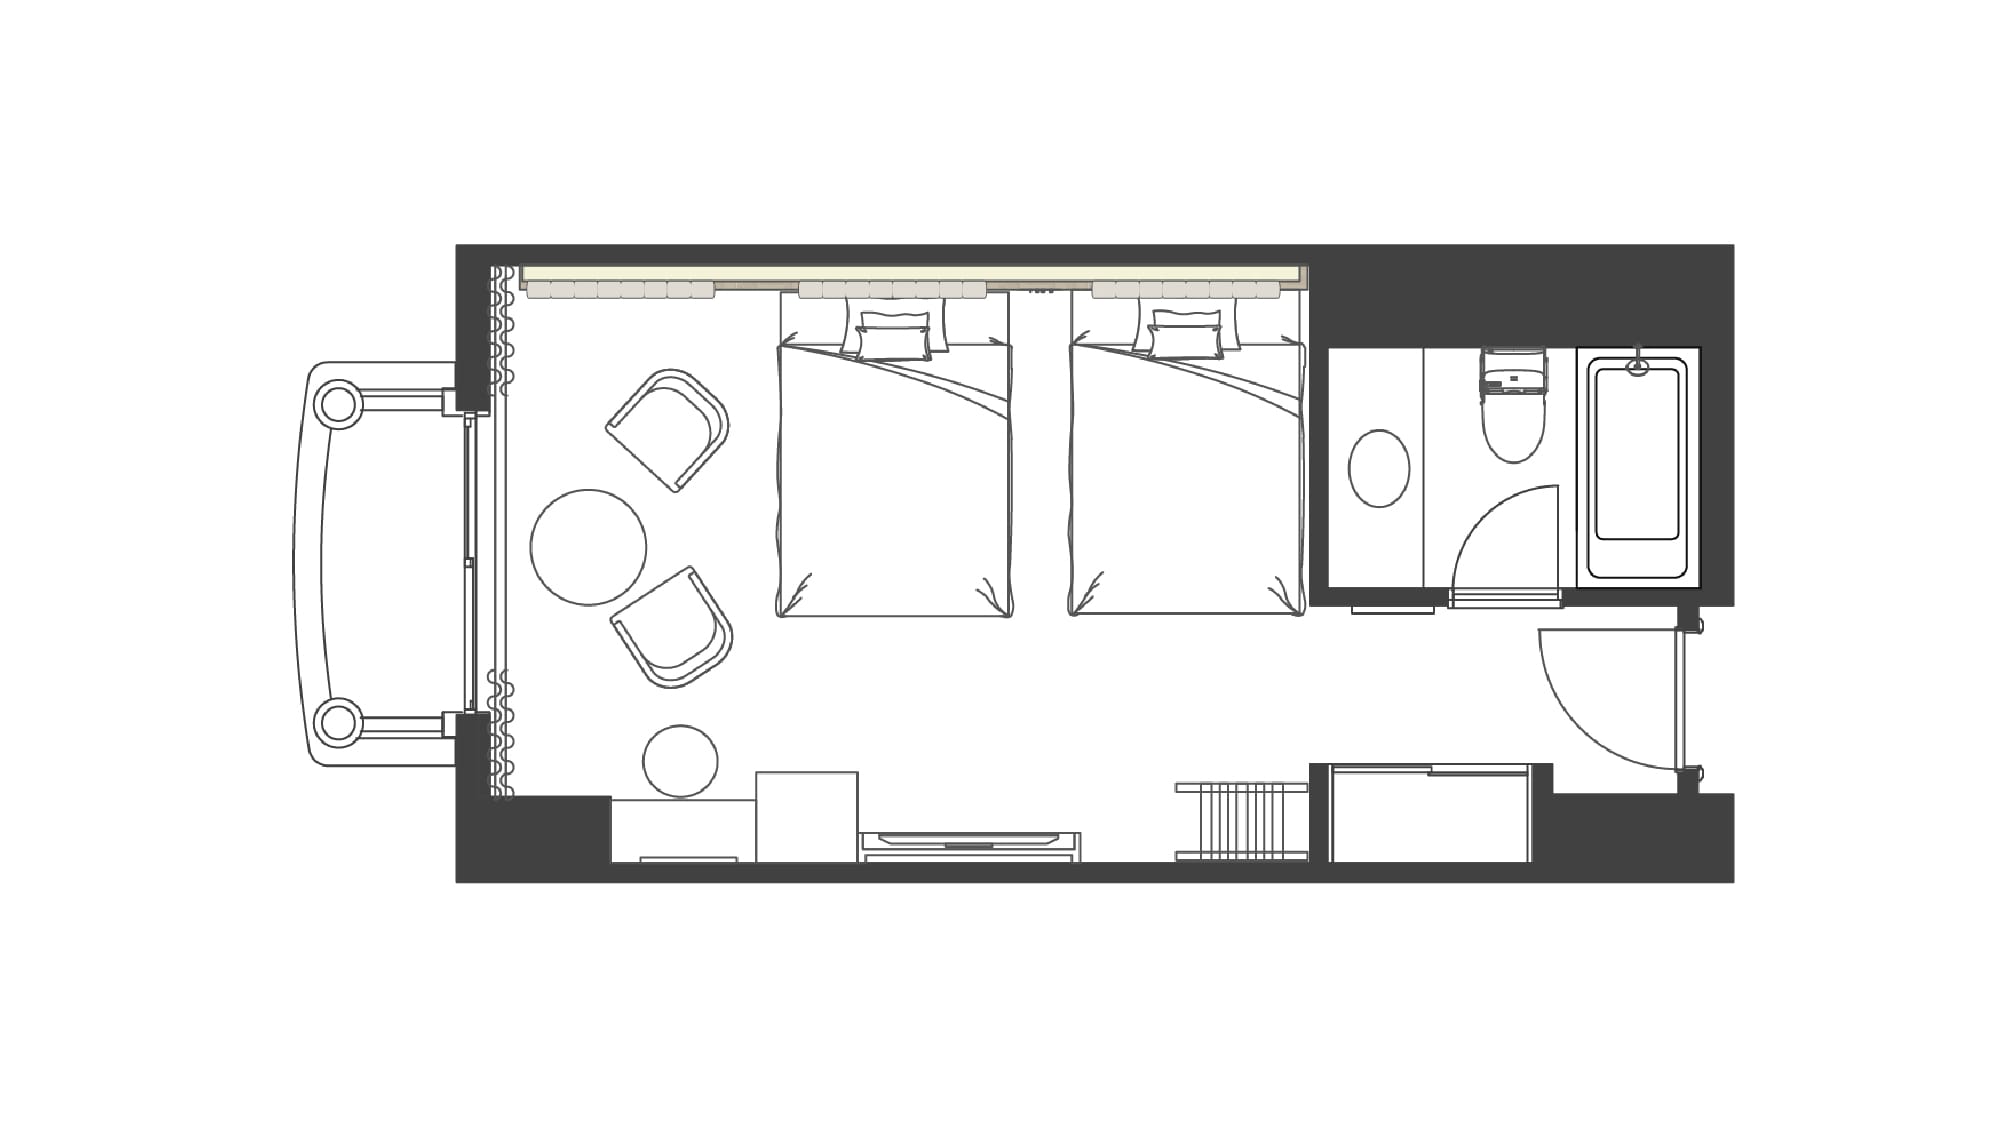 〇 Nikko Standard Room (plan)